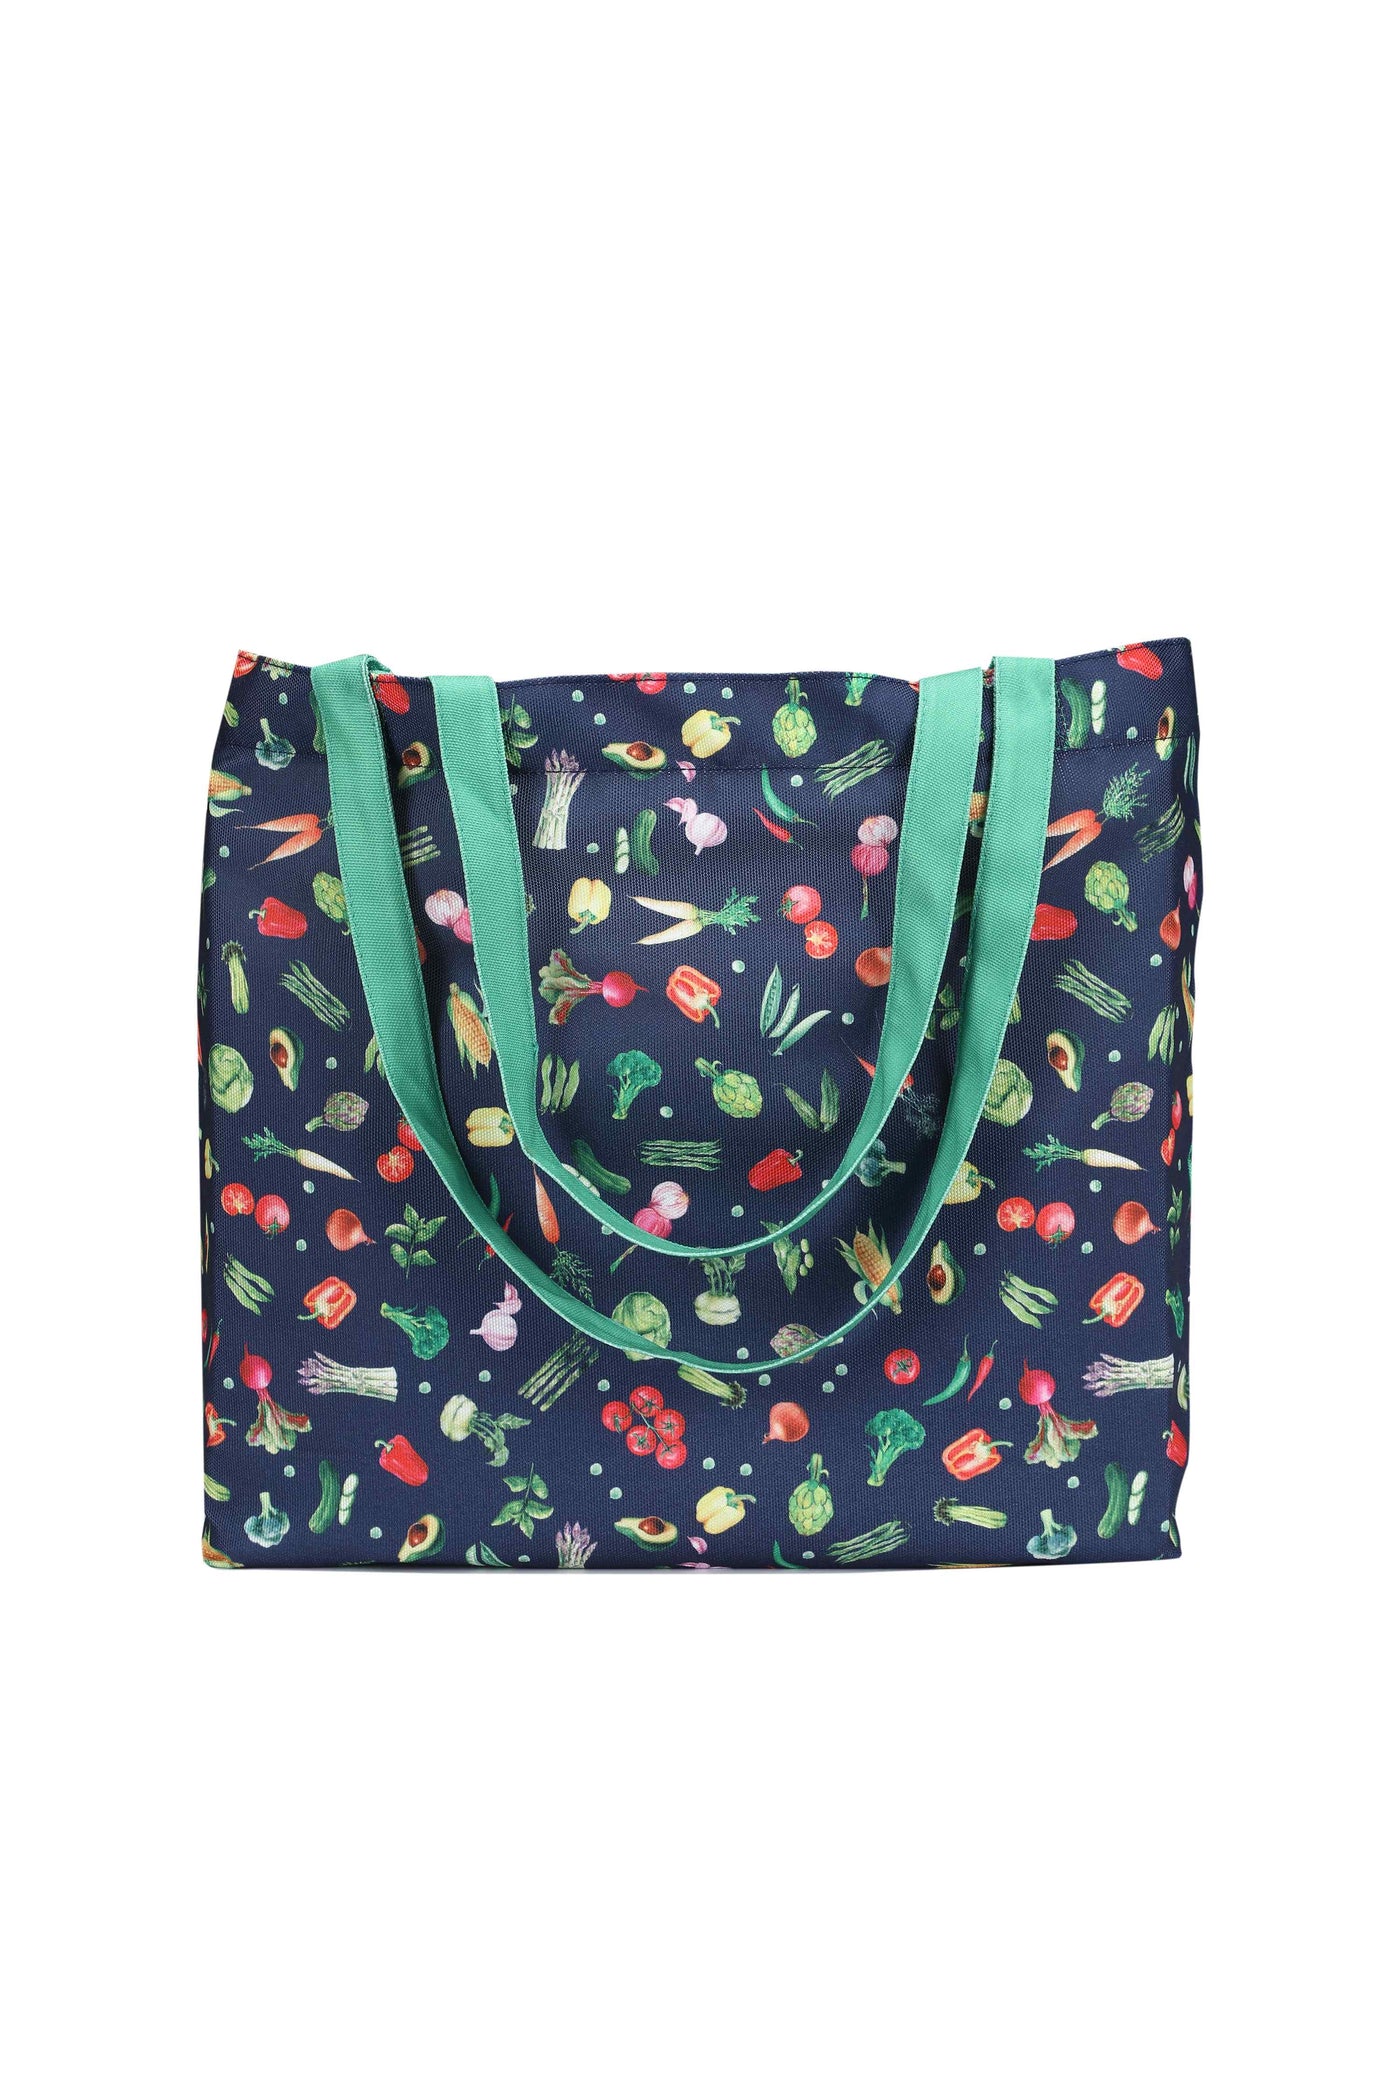 Navy Blue Vegetable Print Shopping Tote Bag